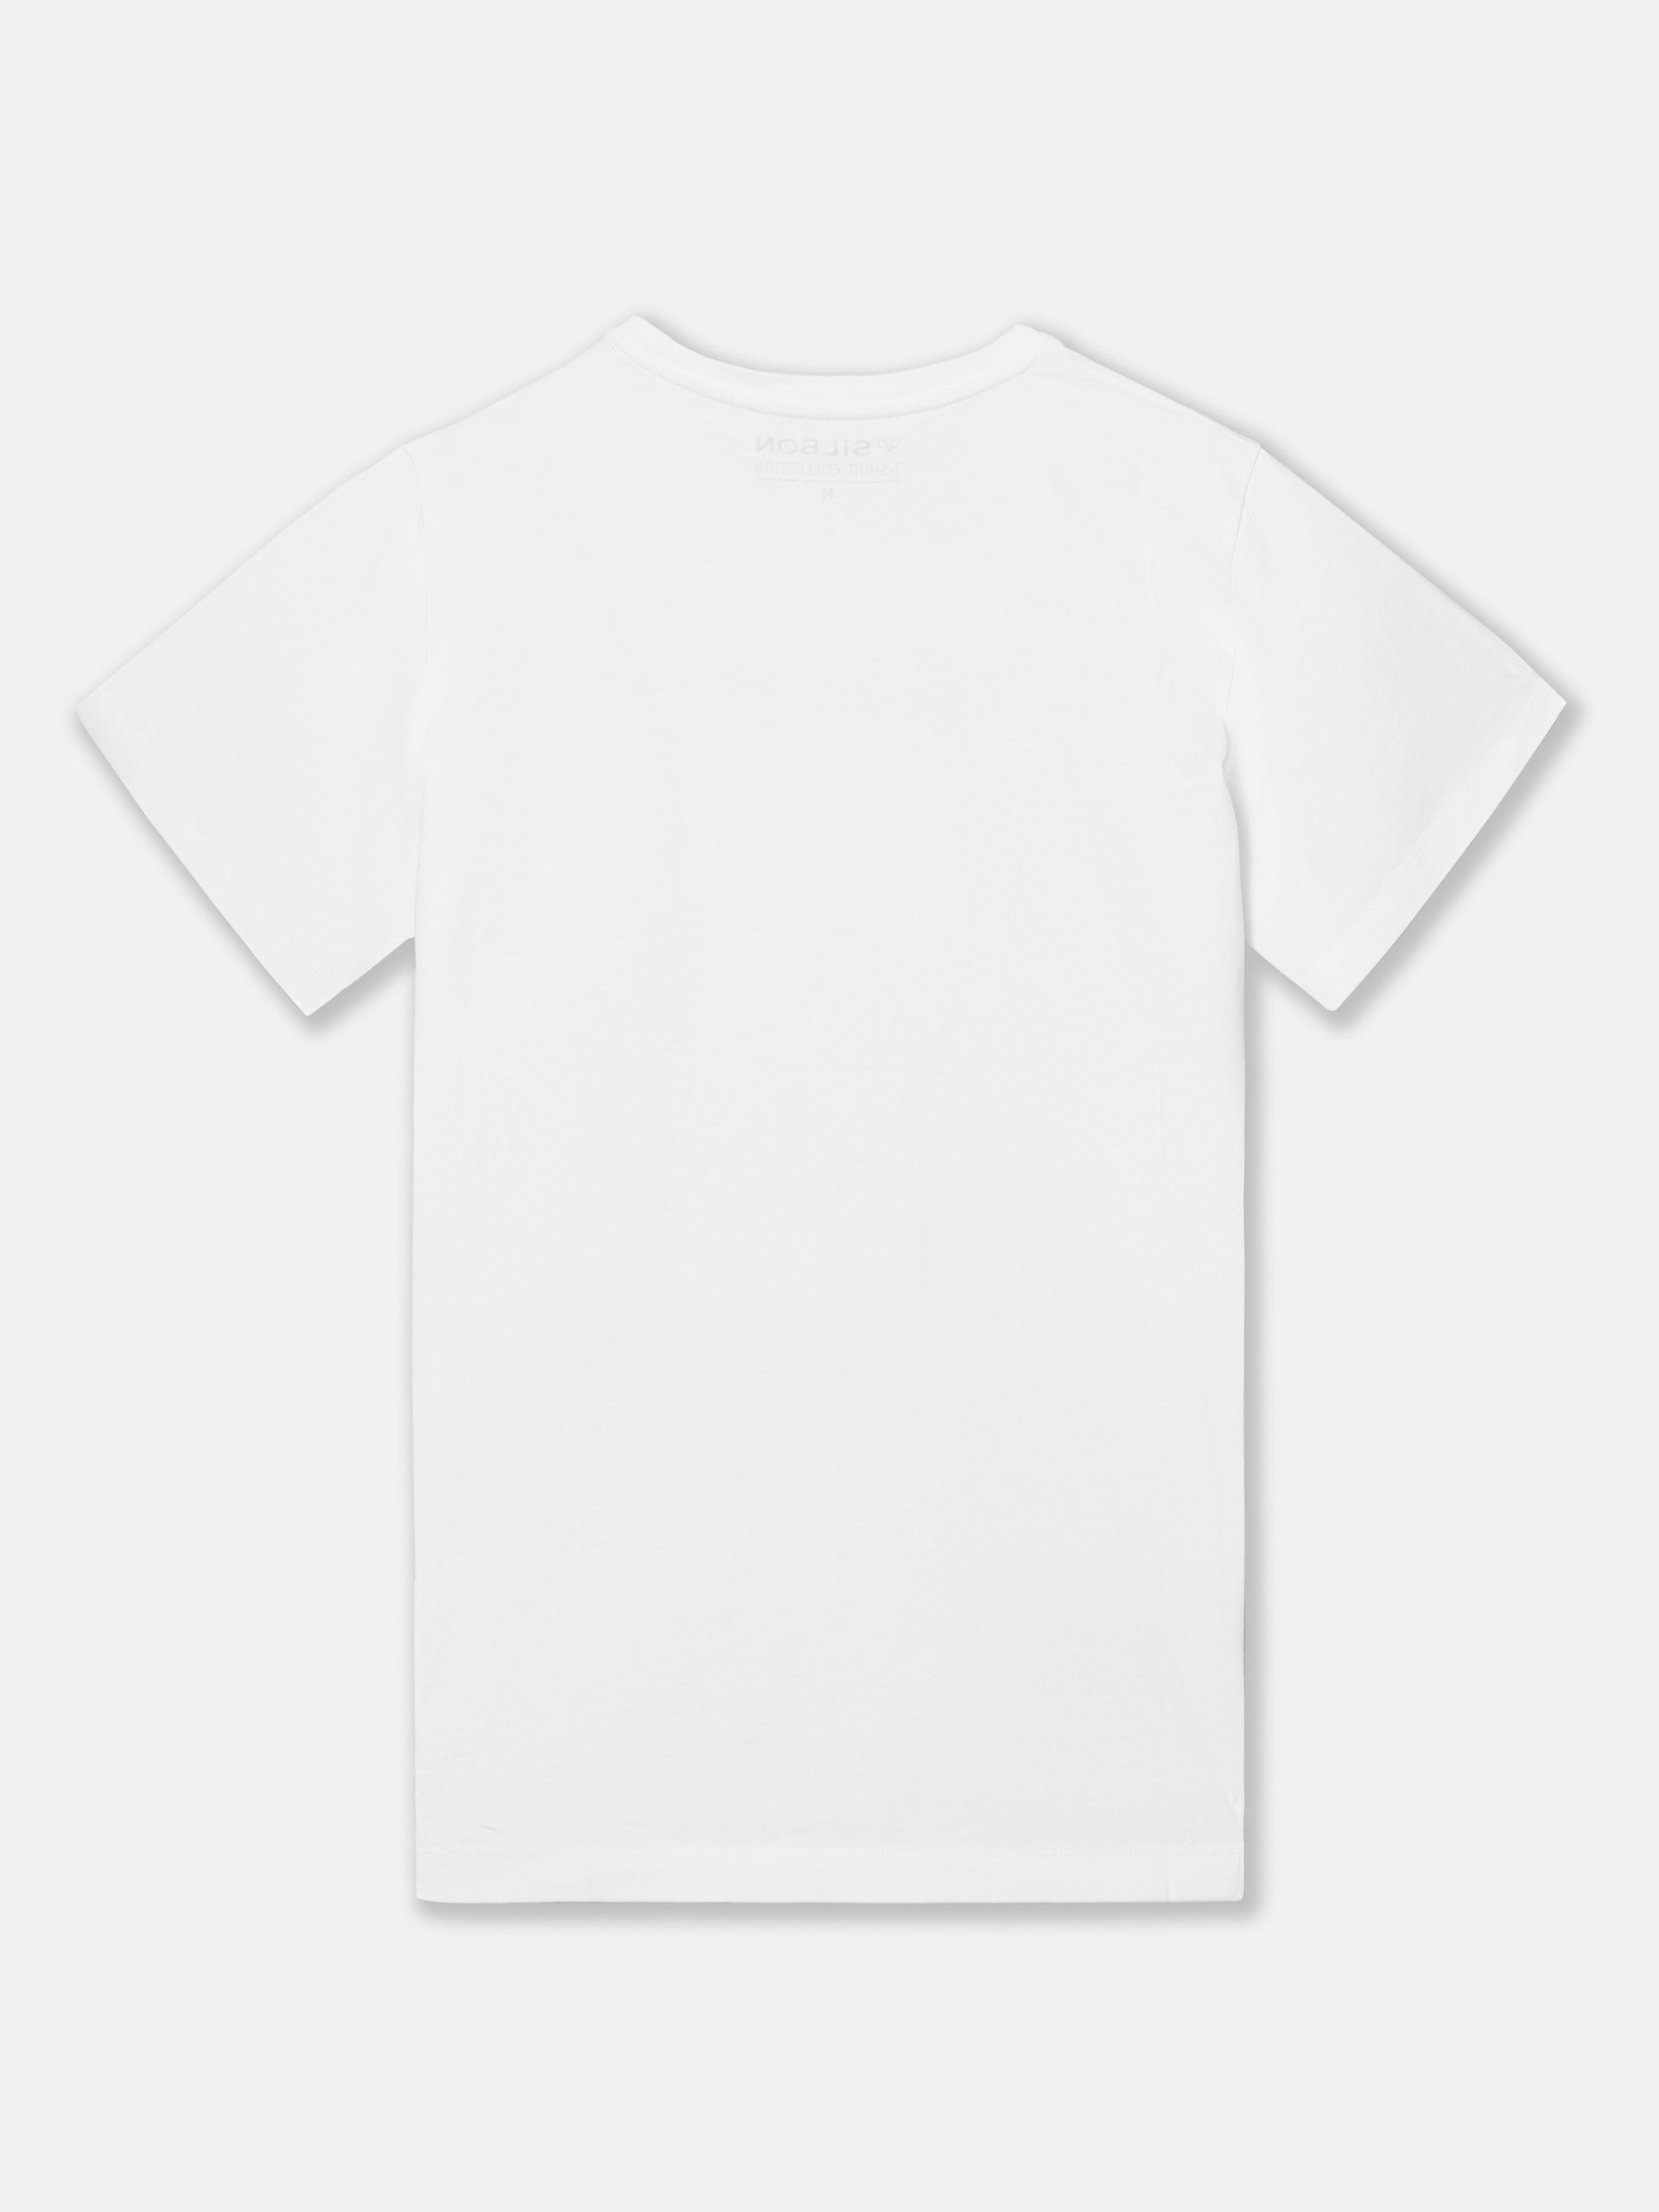 Camiseta SLBN blanca